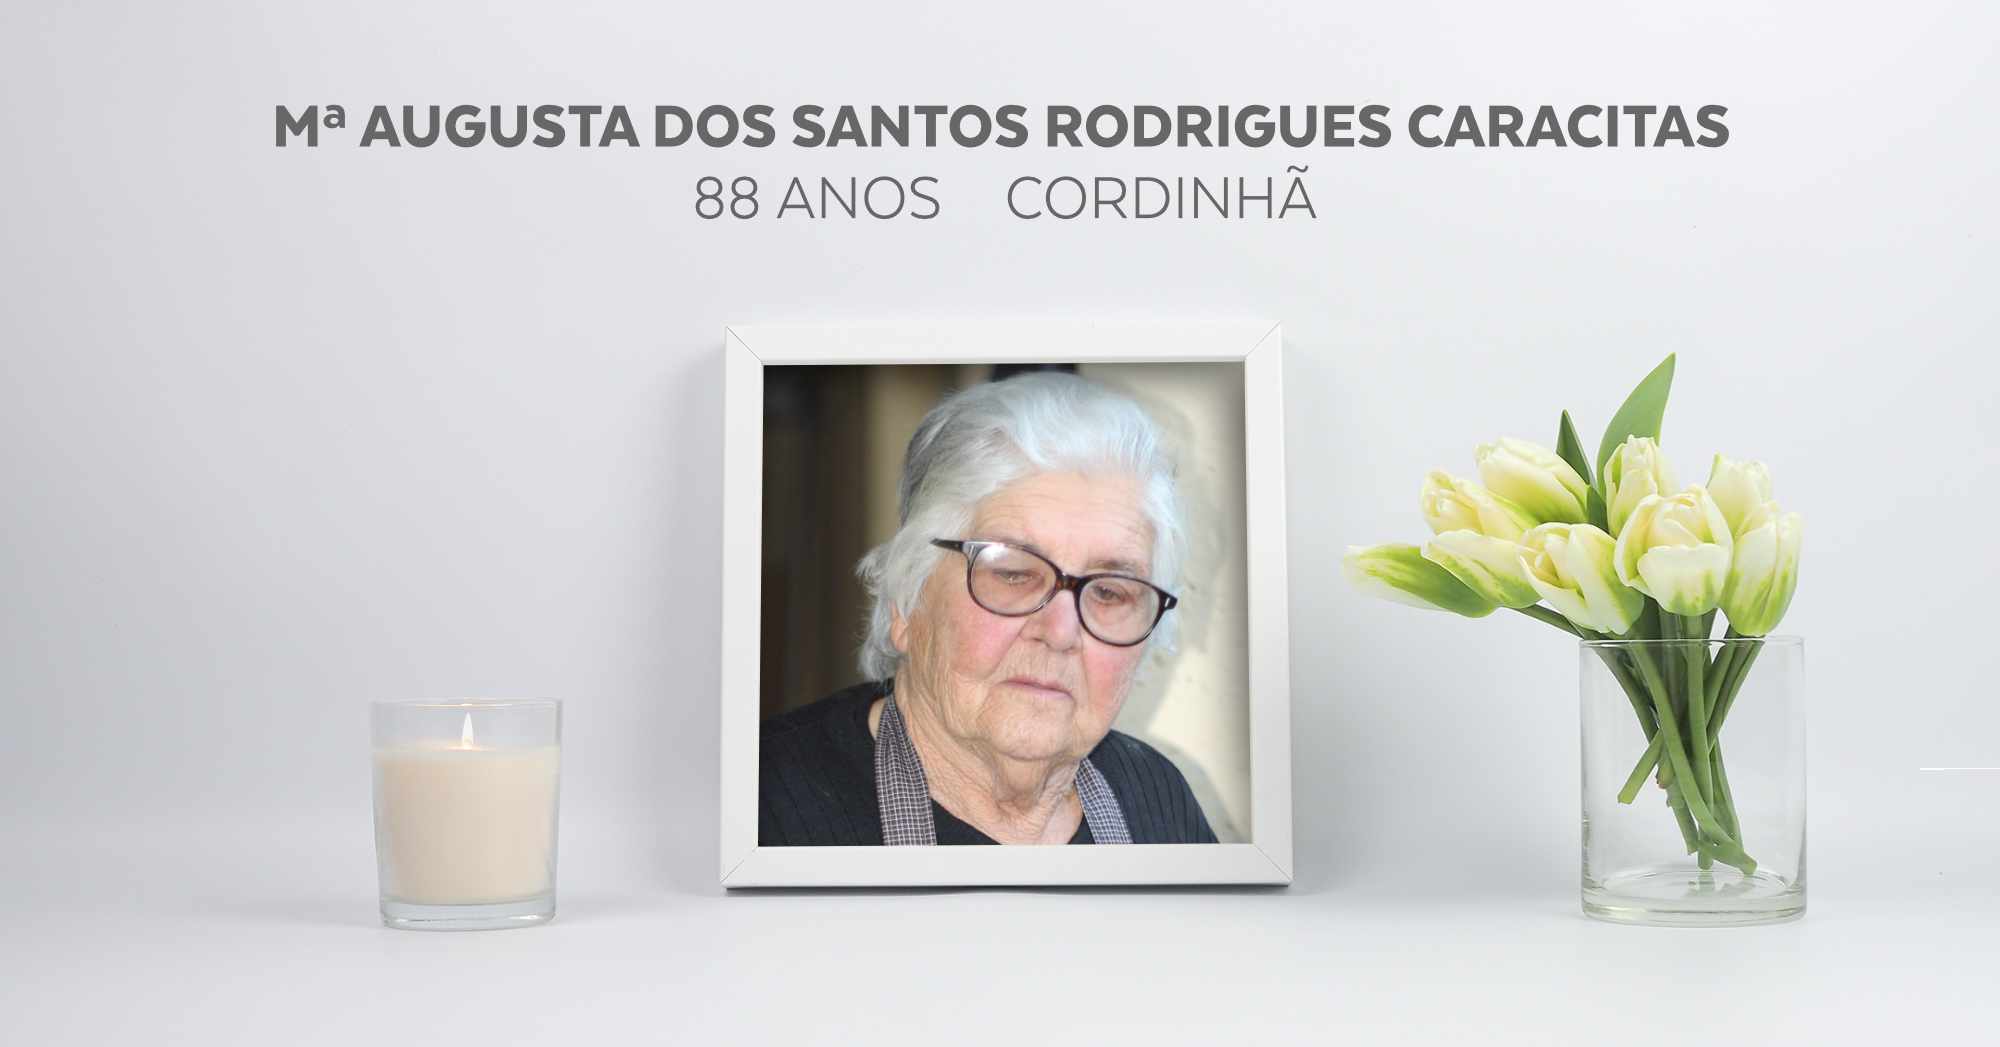 Maria Augusta dos Santos Rodrigues Caracitas